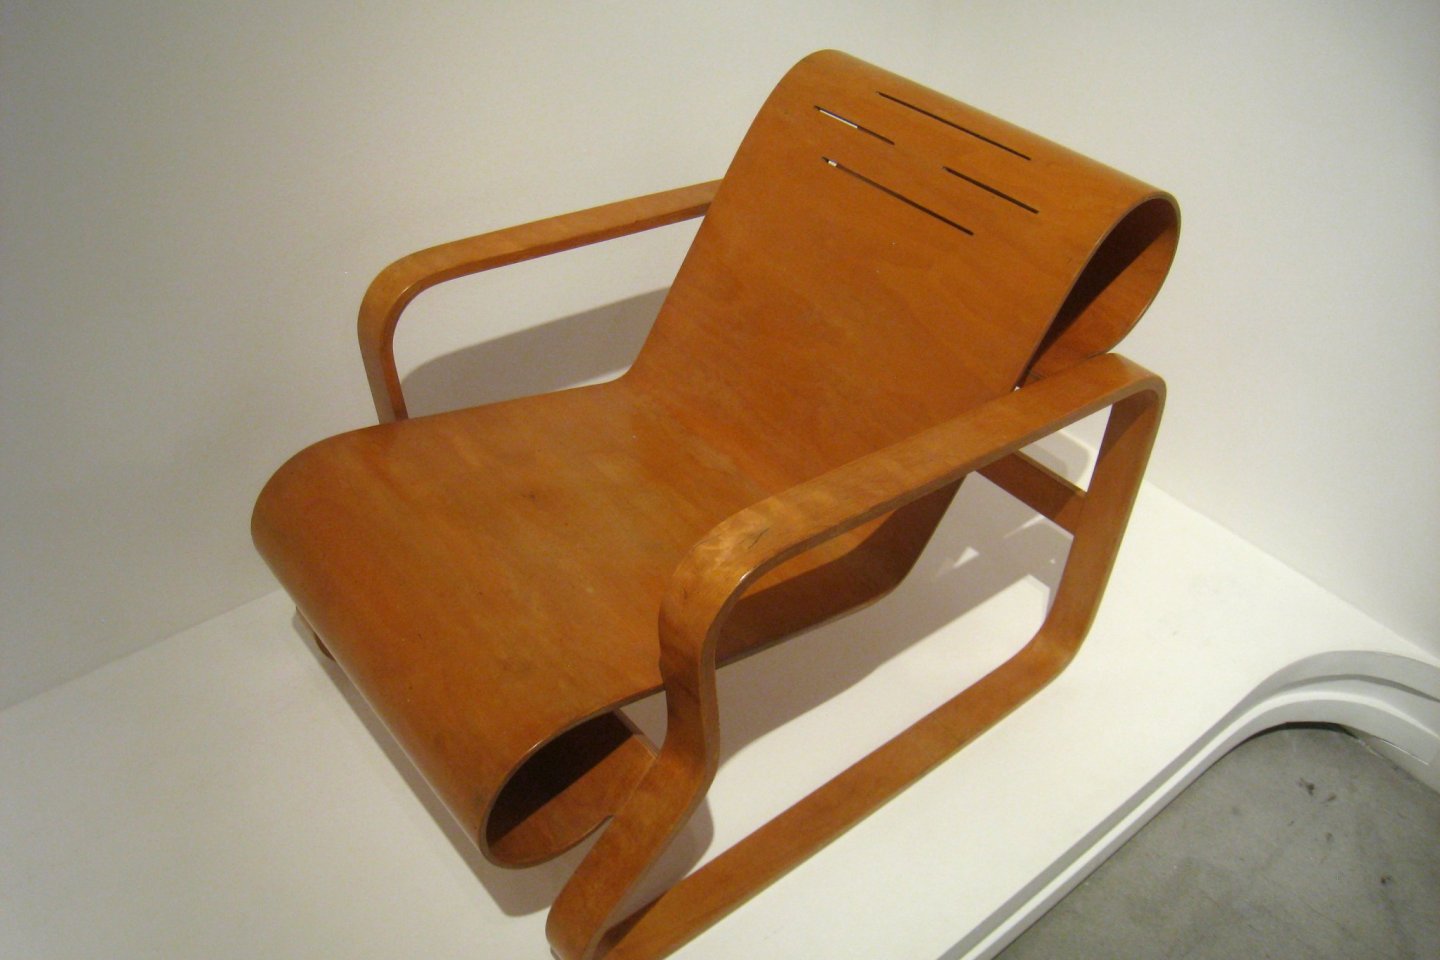 The Paimio Chair - one of Alvar Aalto\'s iconic designs